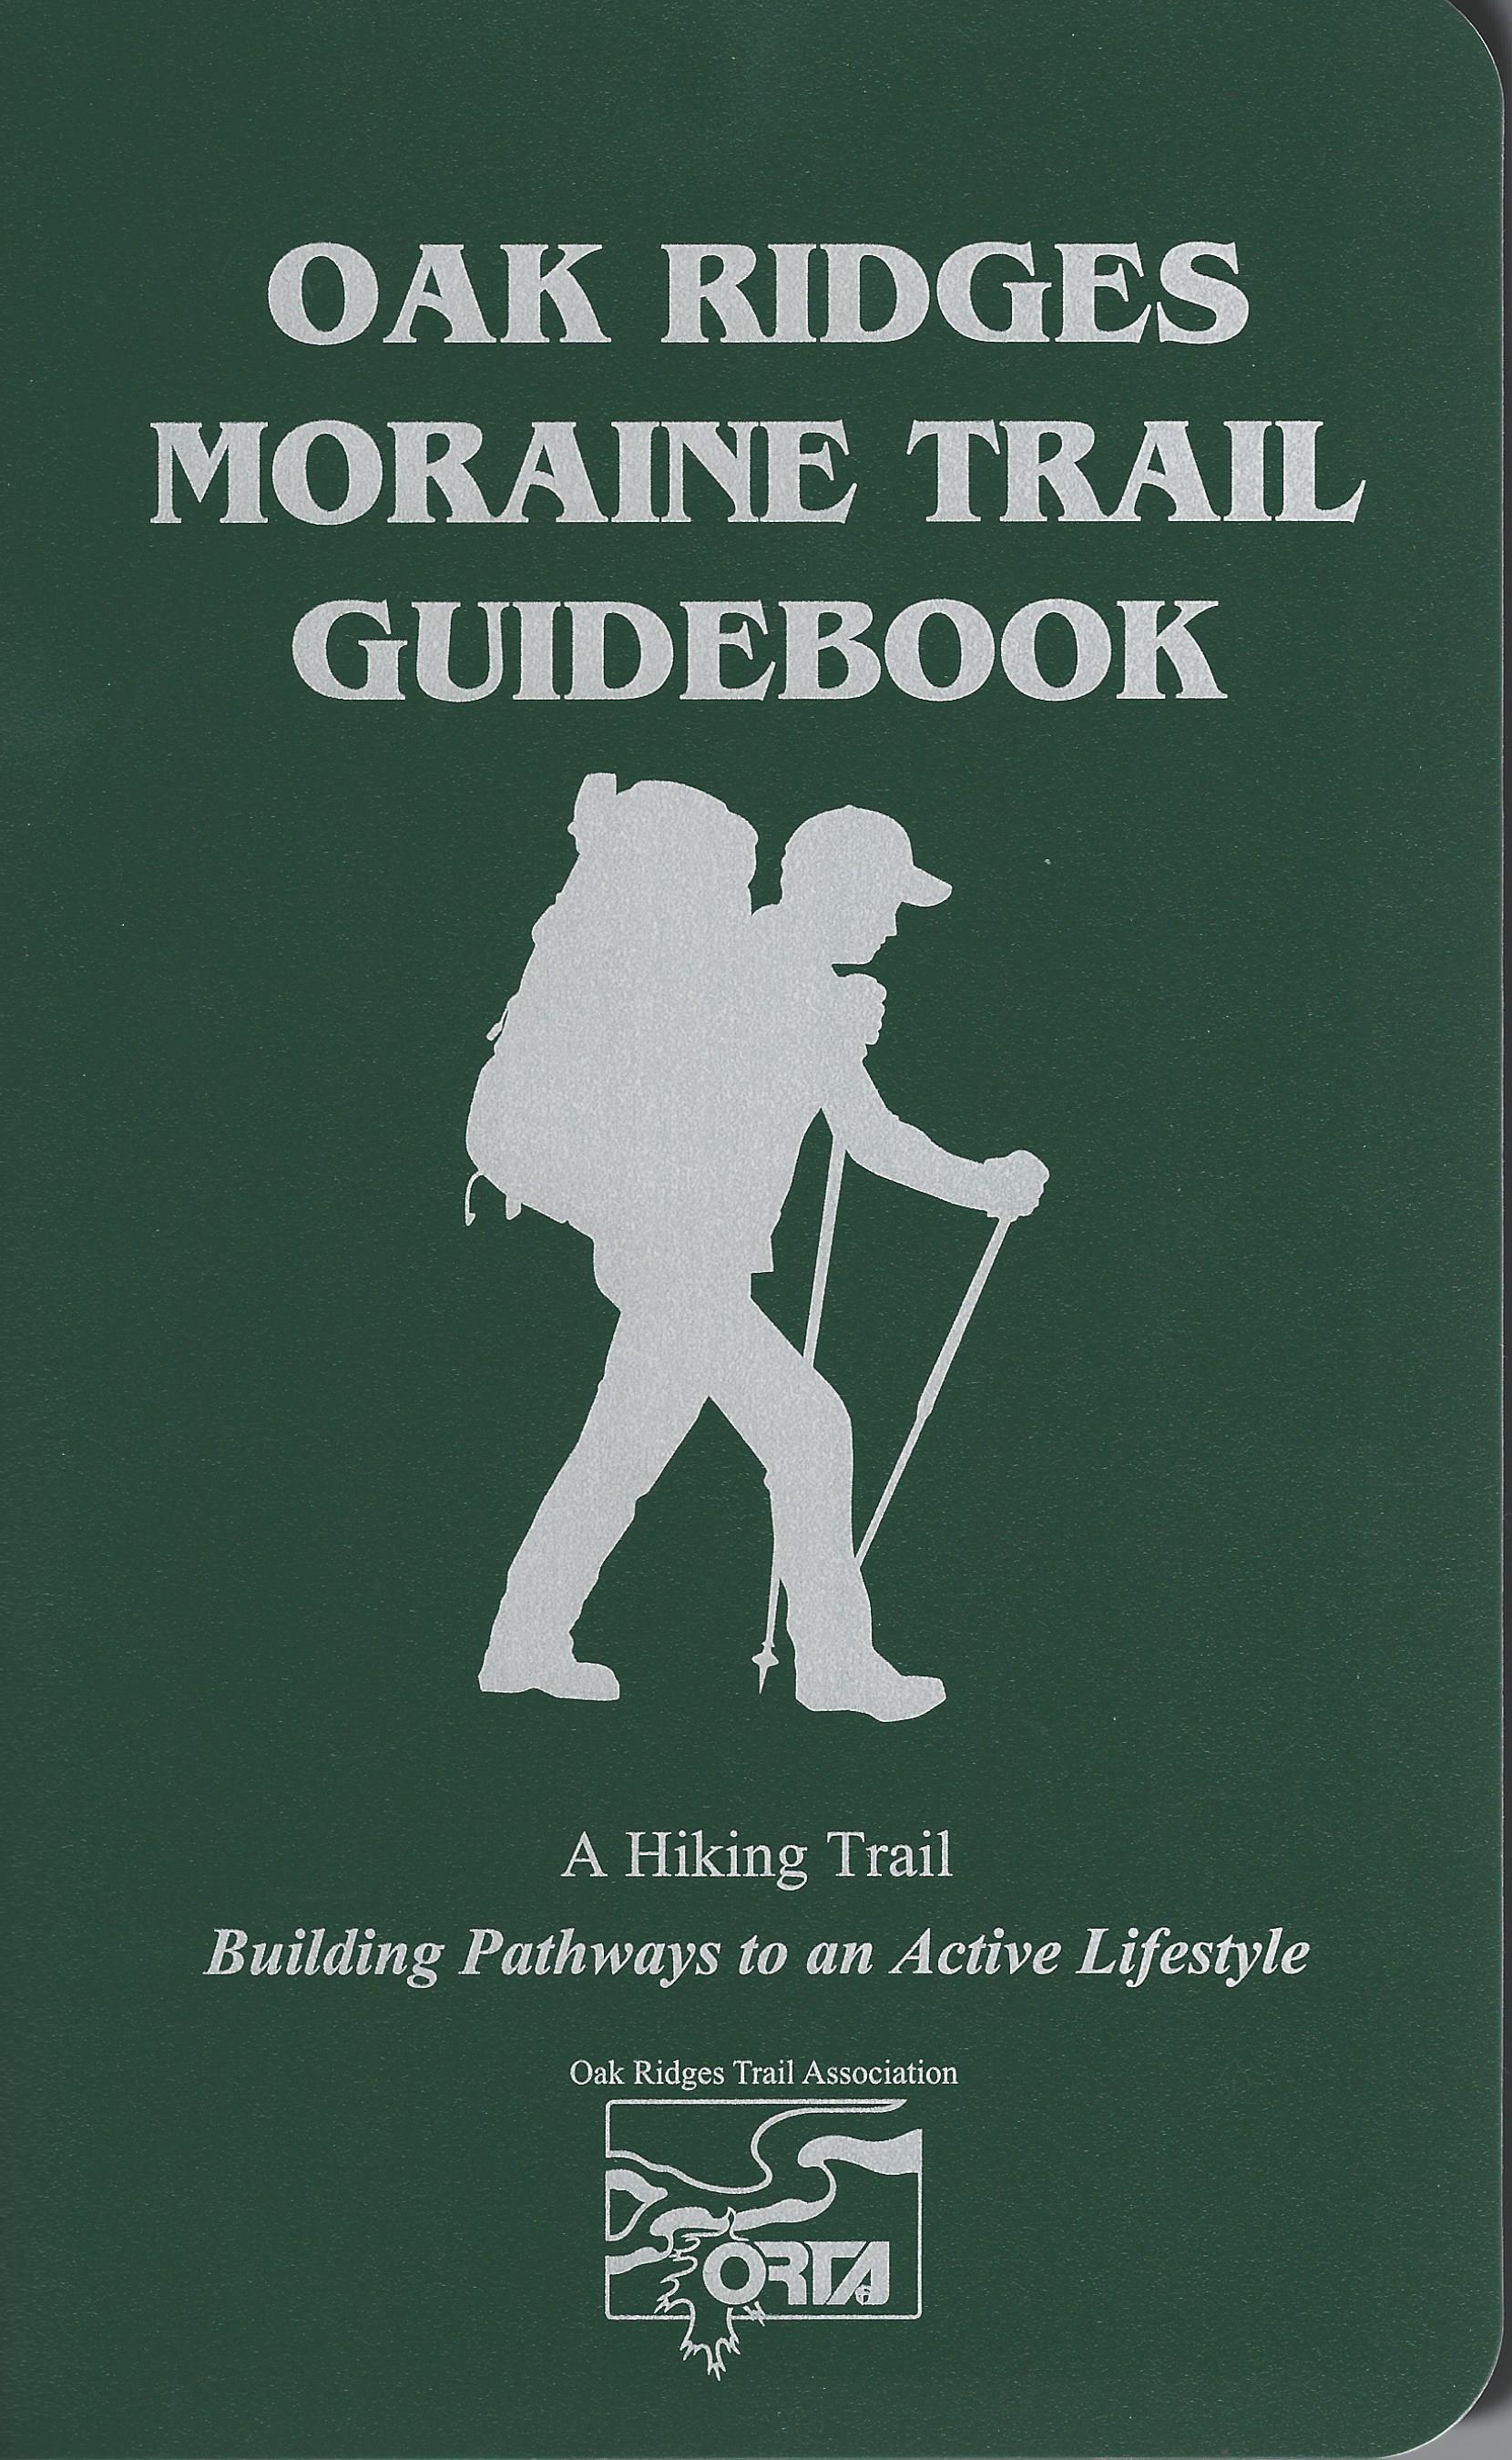 2021 Guidebook Cover.jpg